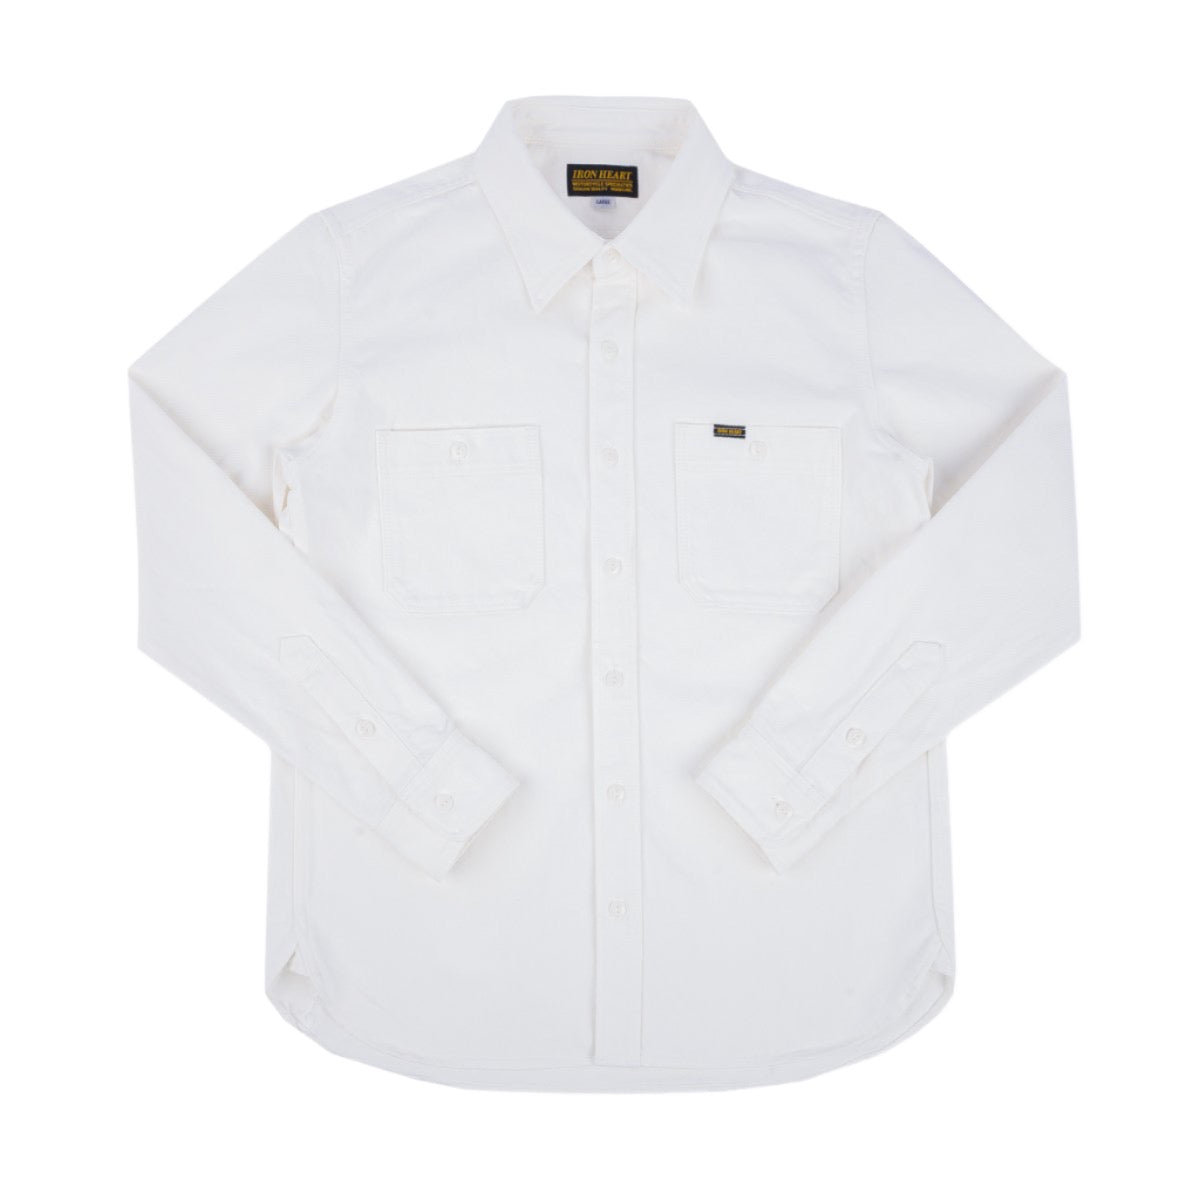 IHSH-391-WHT 13.5oz Denim Work Shirt White